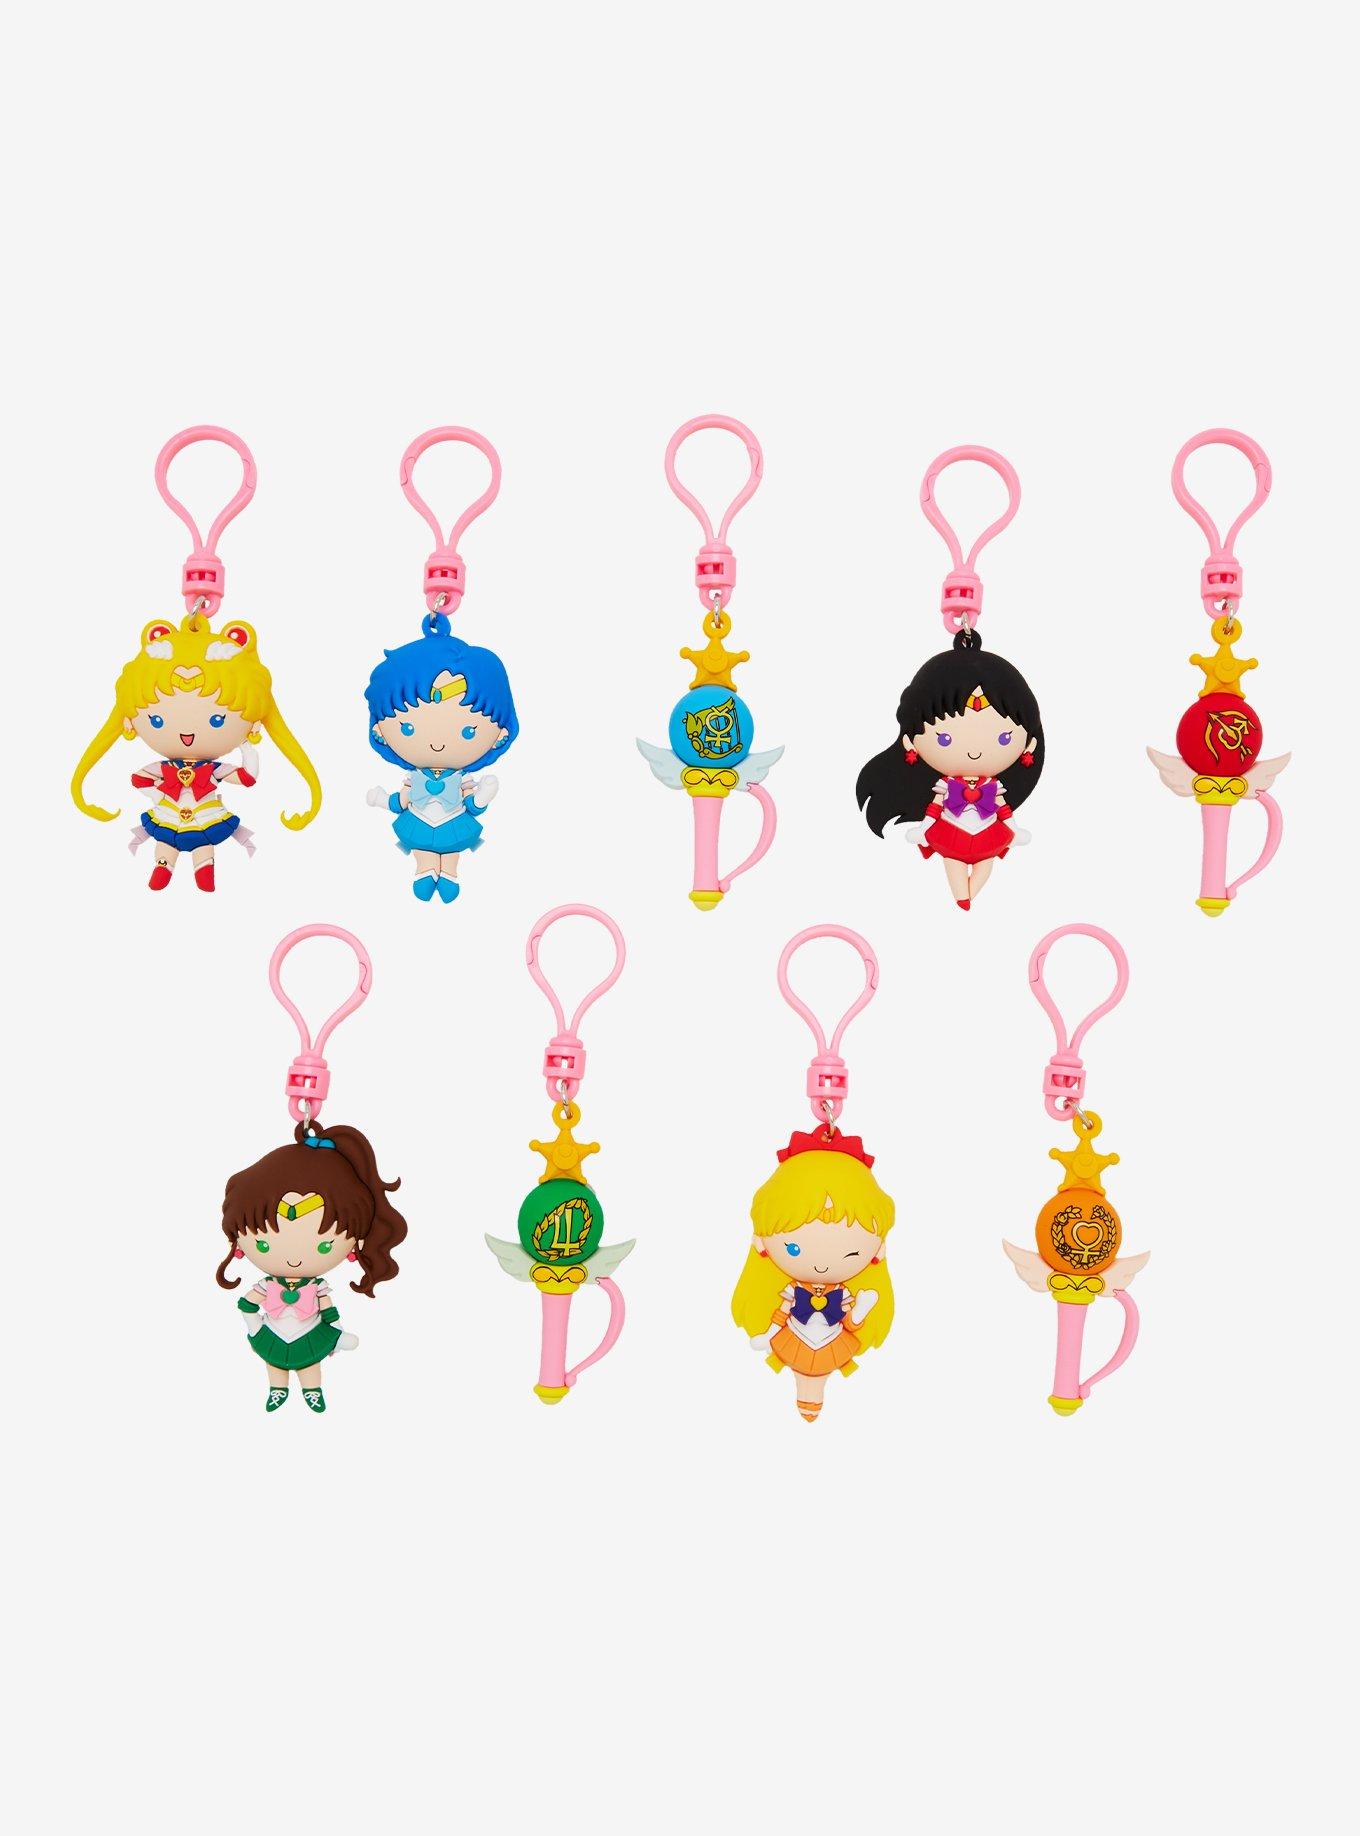 Sailor Moon Keychain Luna Cat Figure Toy Cute Keychain for Bag Charms -  Sailor Moon Store